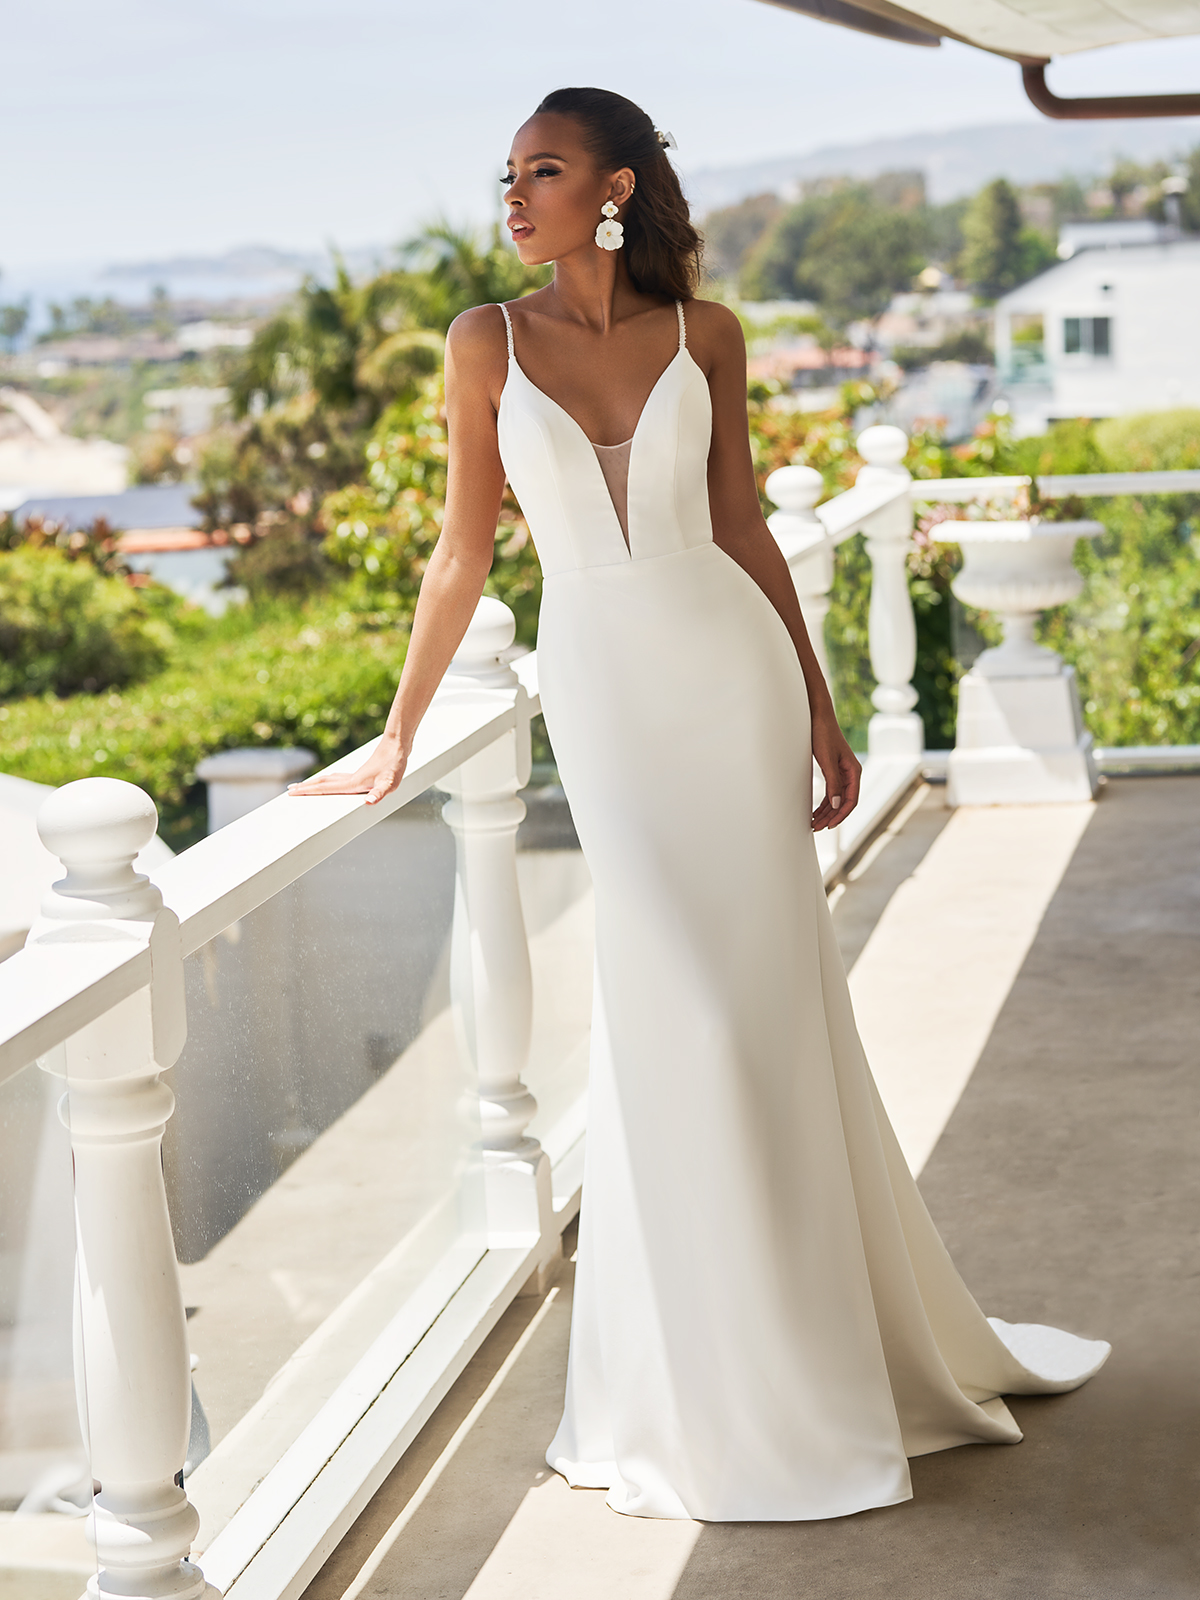 Simple And Elegant Wedding Dresses Wedding Inspiration Moonlight Blog 2506